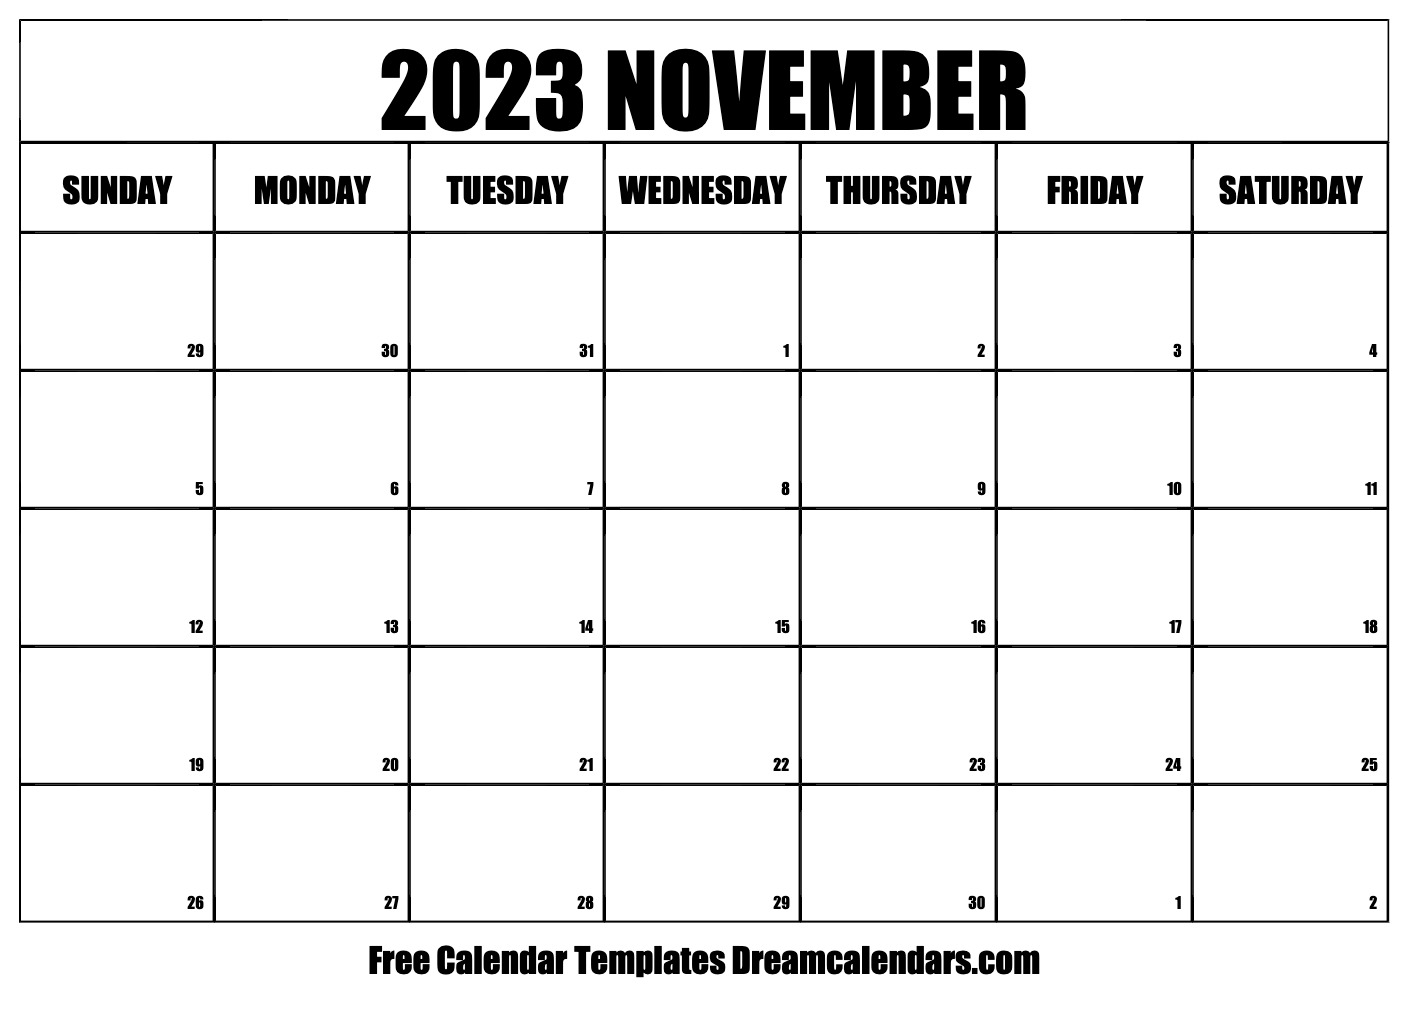 november-2023-free-calendar-printable-november-2023-calendar-free